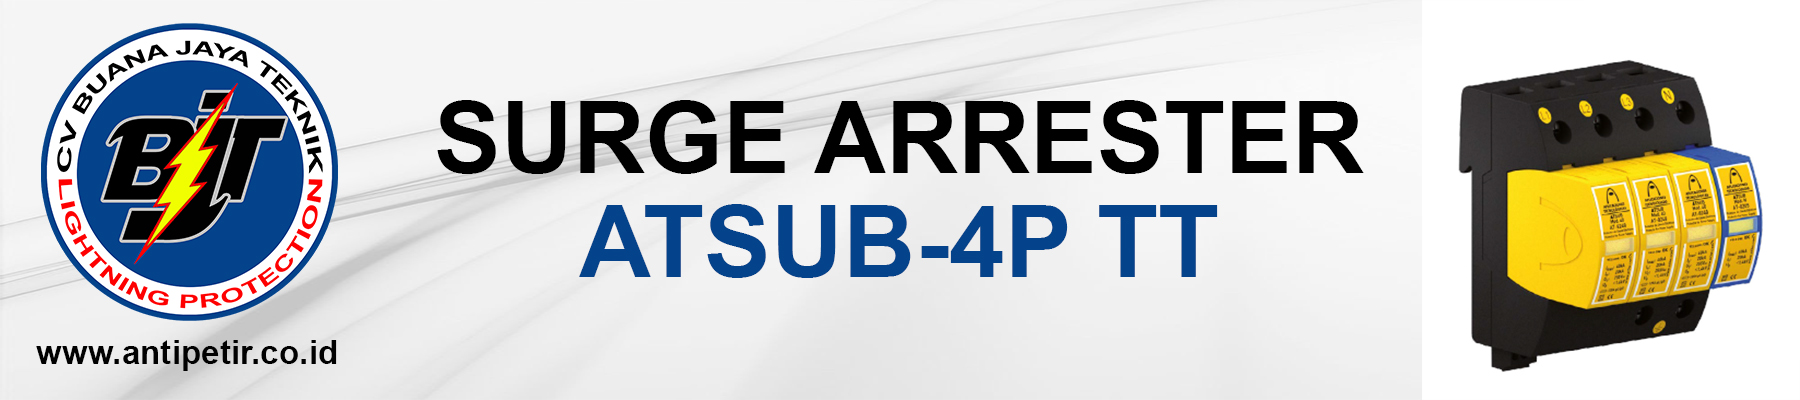 PENANGKAL PETIR SURABAYA - SURGE ARRESTER ATSUB-4P TT I